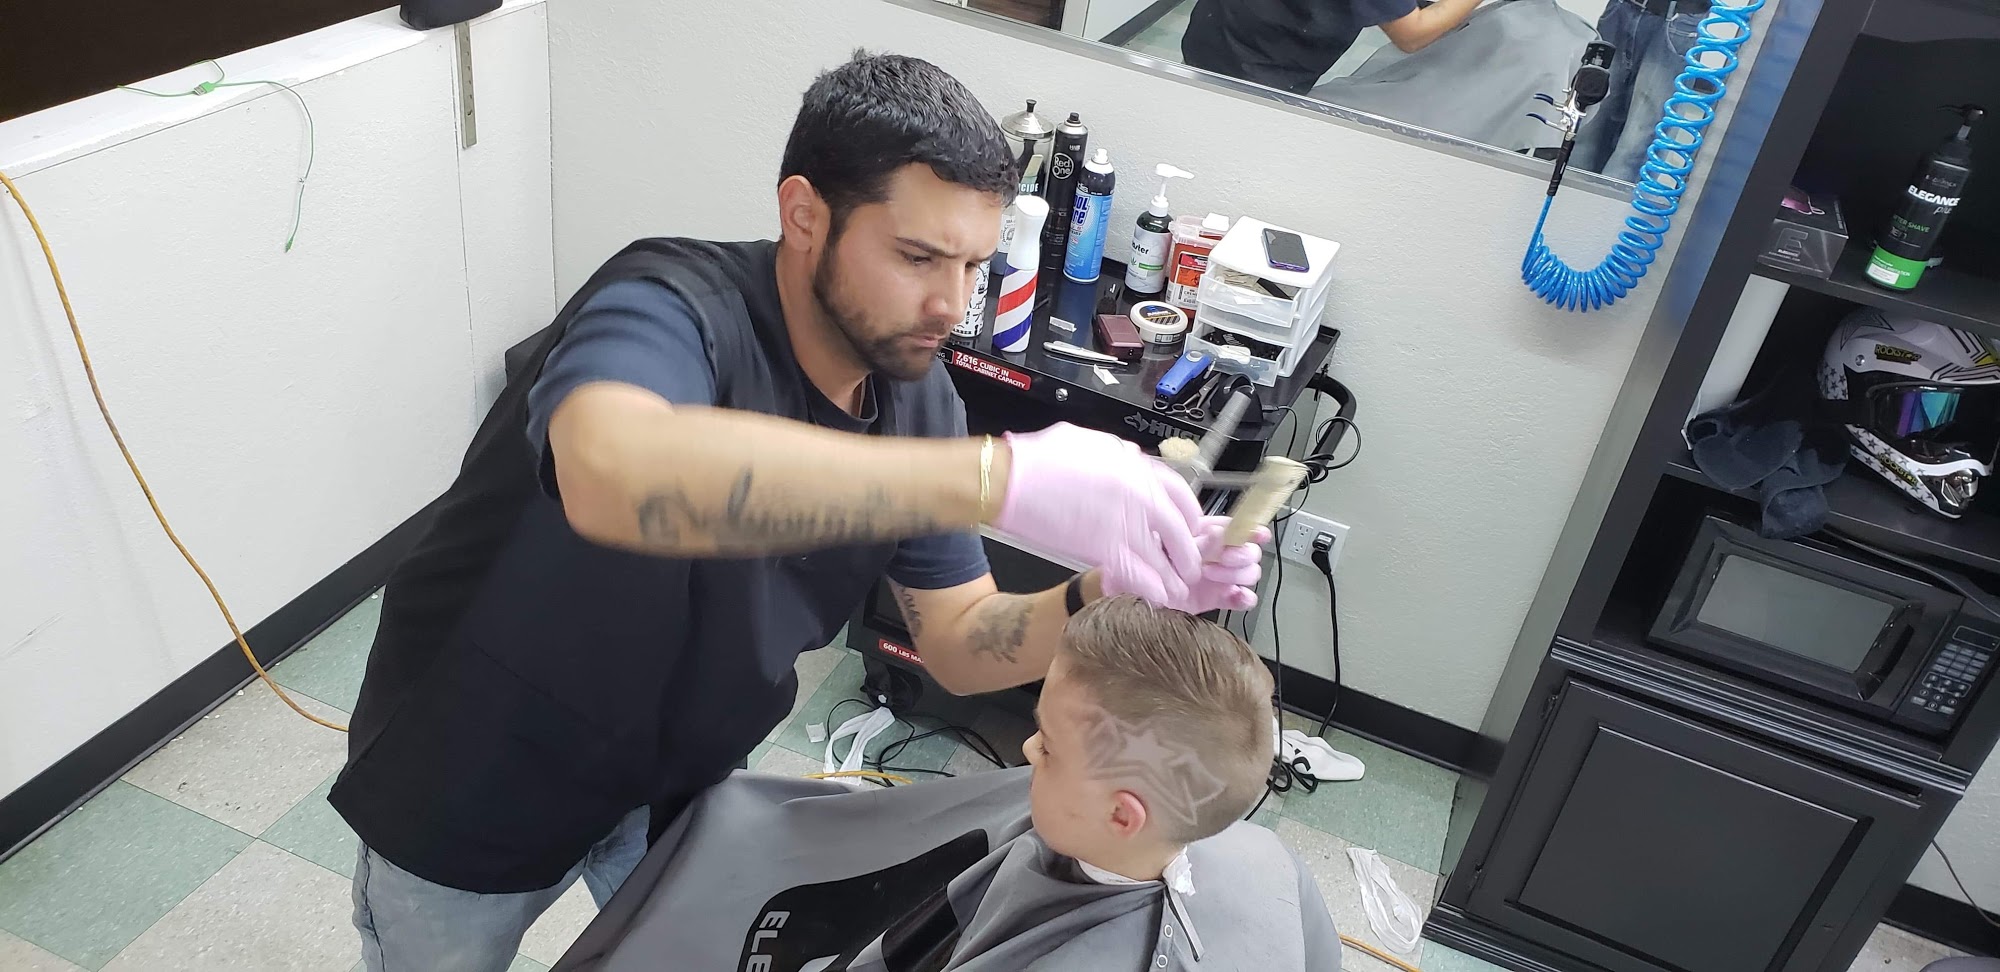 Dro’s Barbershop